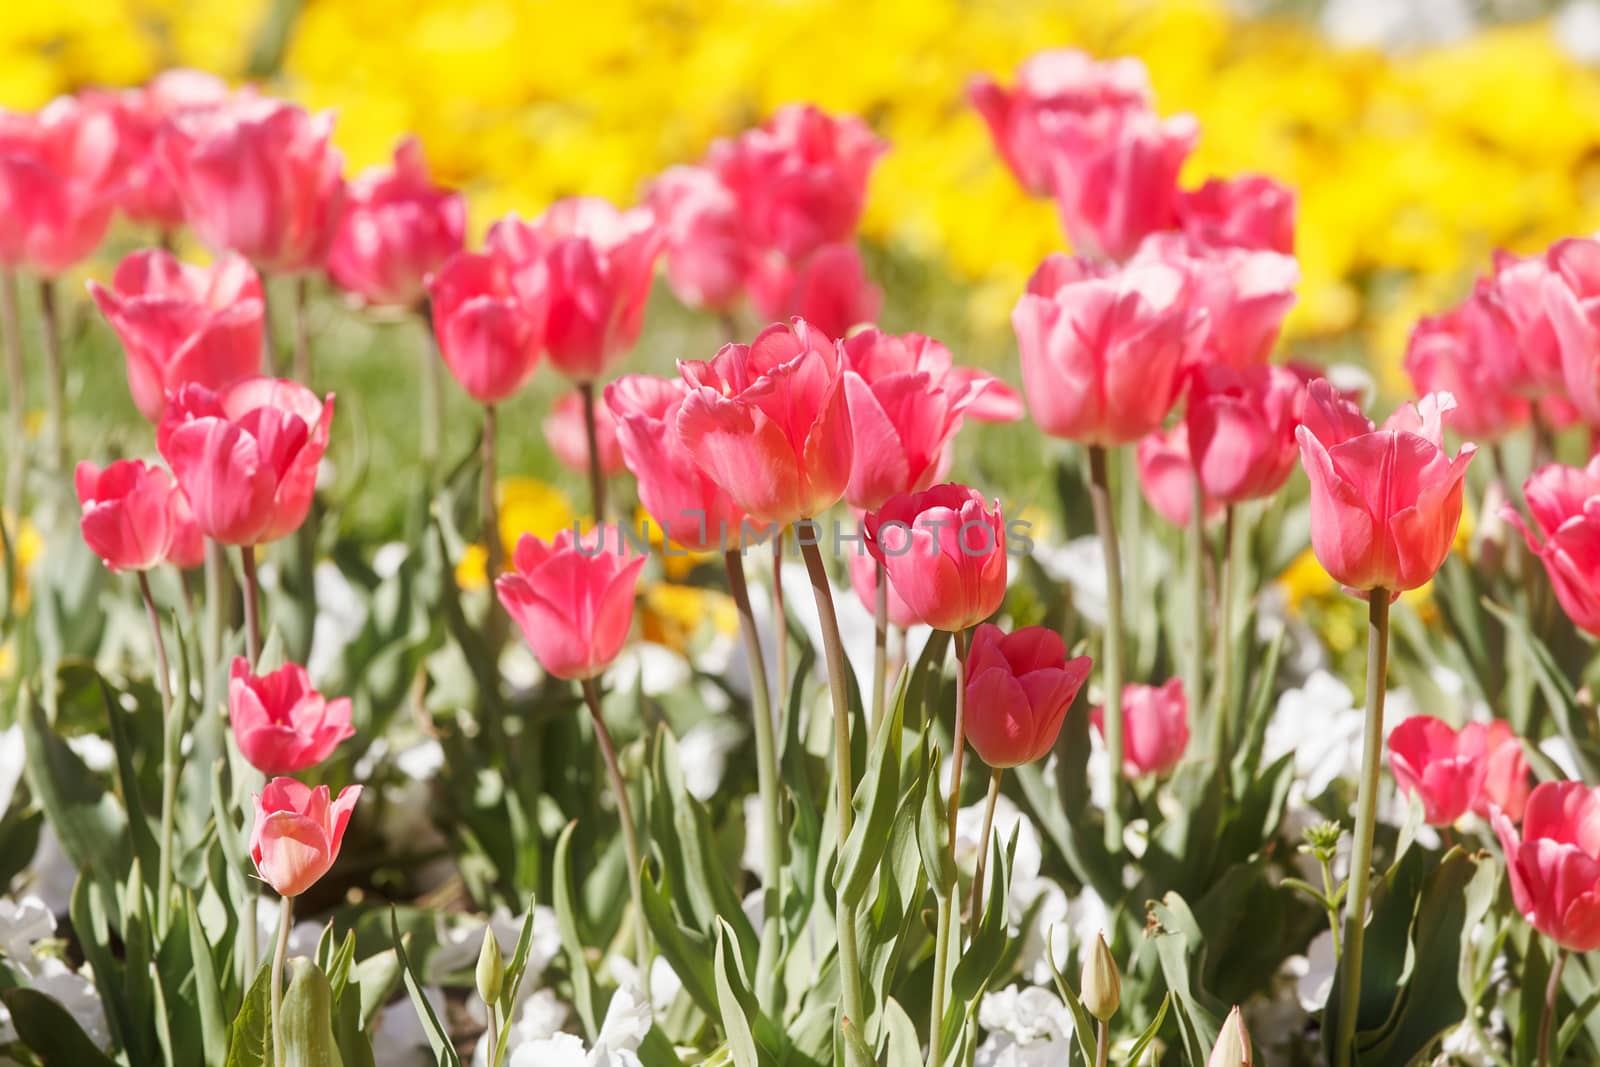 Tulips and spring flowers in garden under warm sunshine, close up